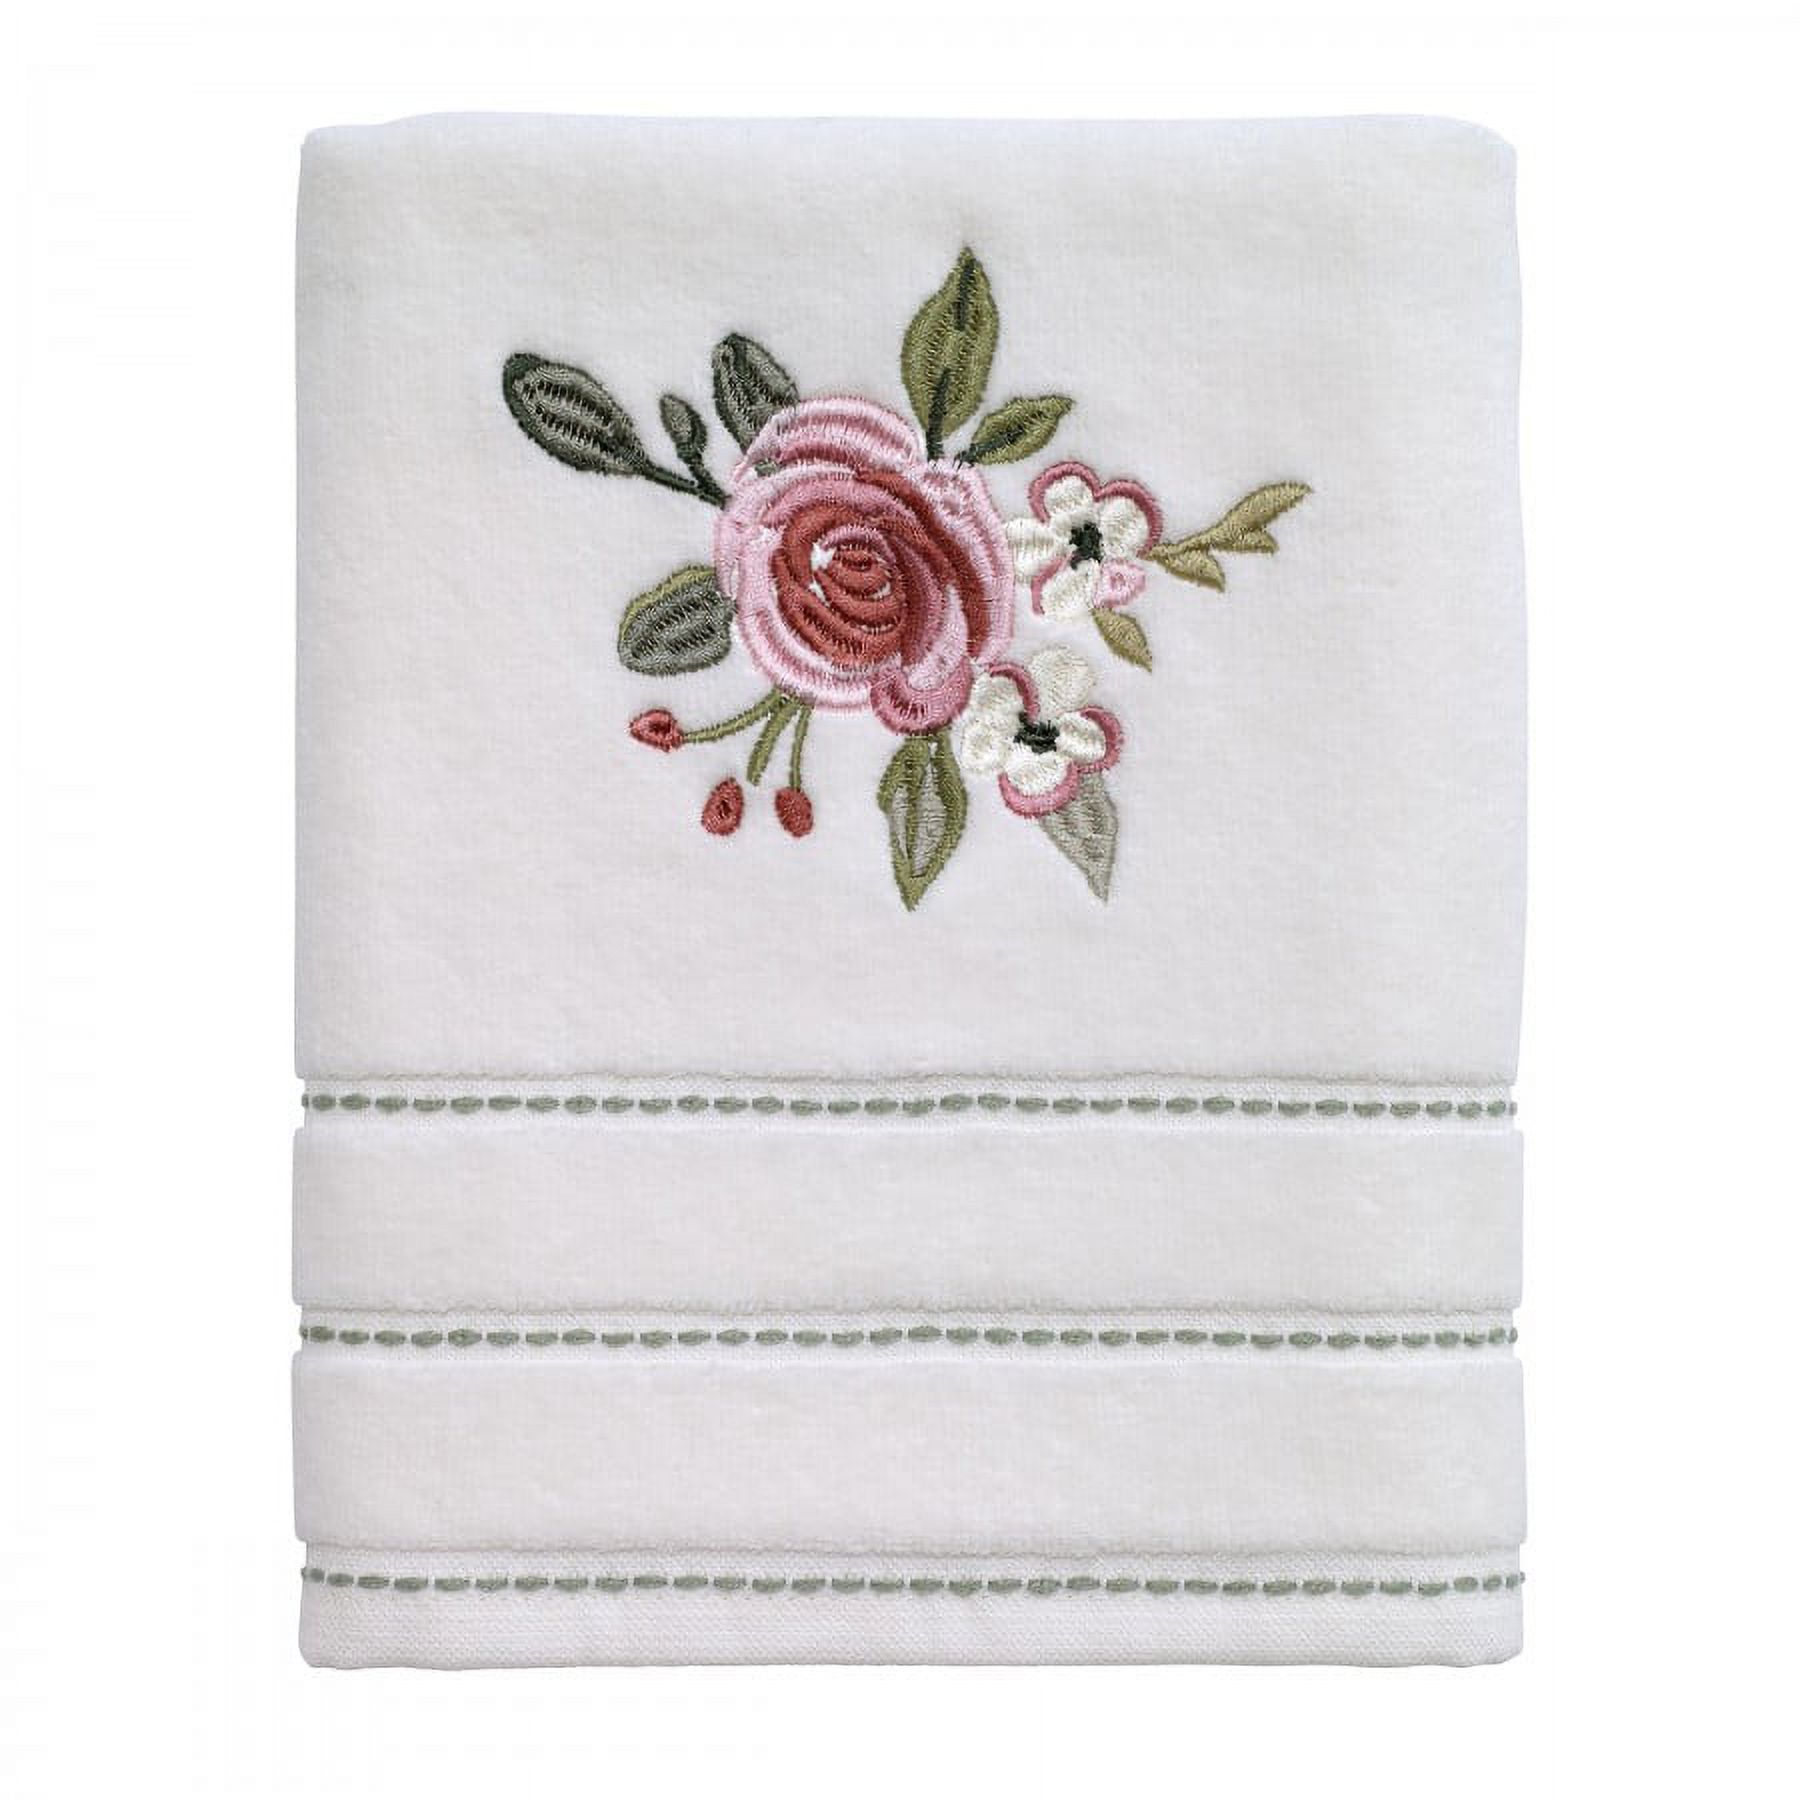 Avanti Spring Garden Hand Towel - image 1 of 3